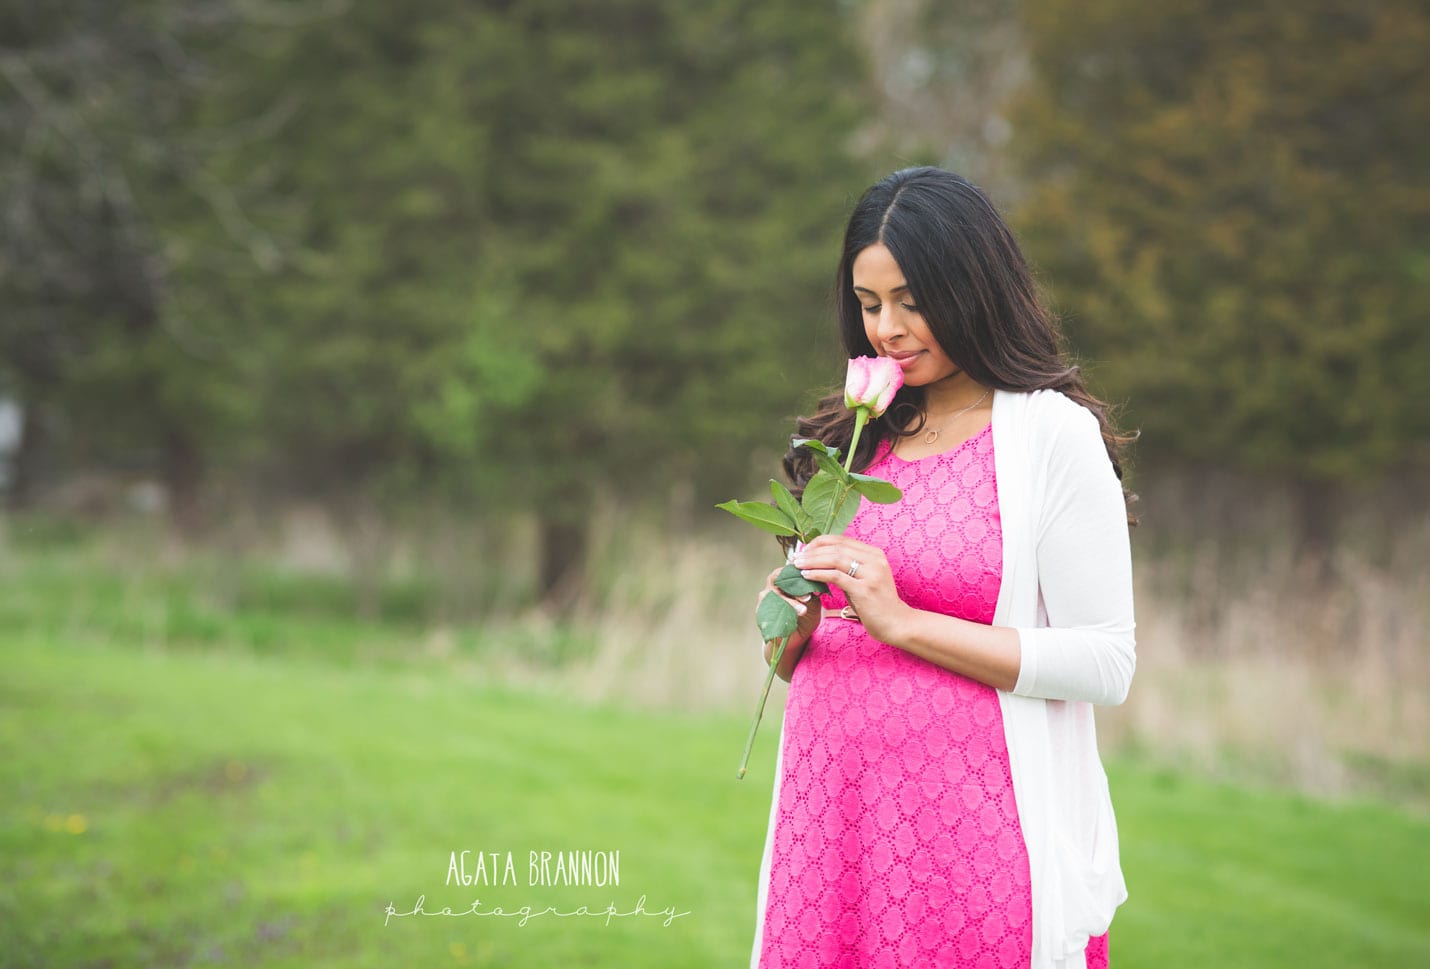 Palatine Maternity Photographer | Agata Brannon Photography